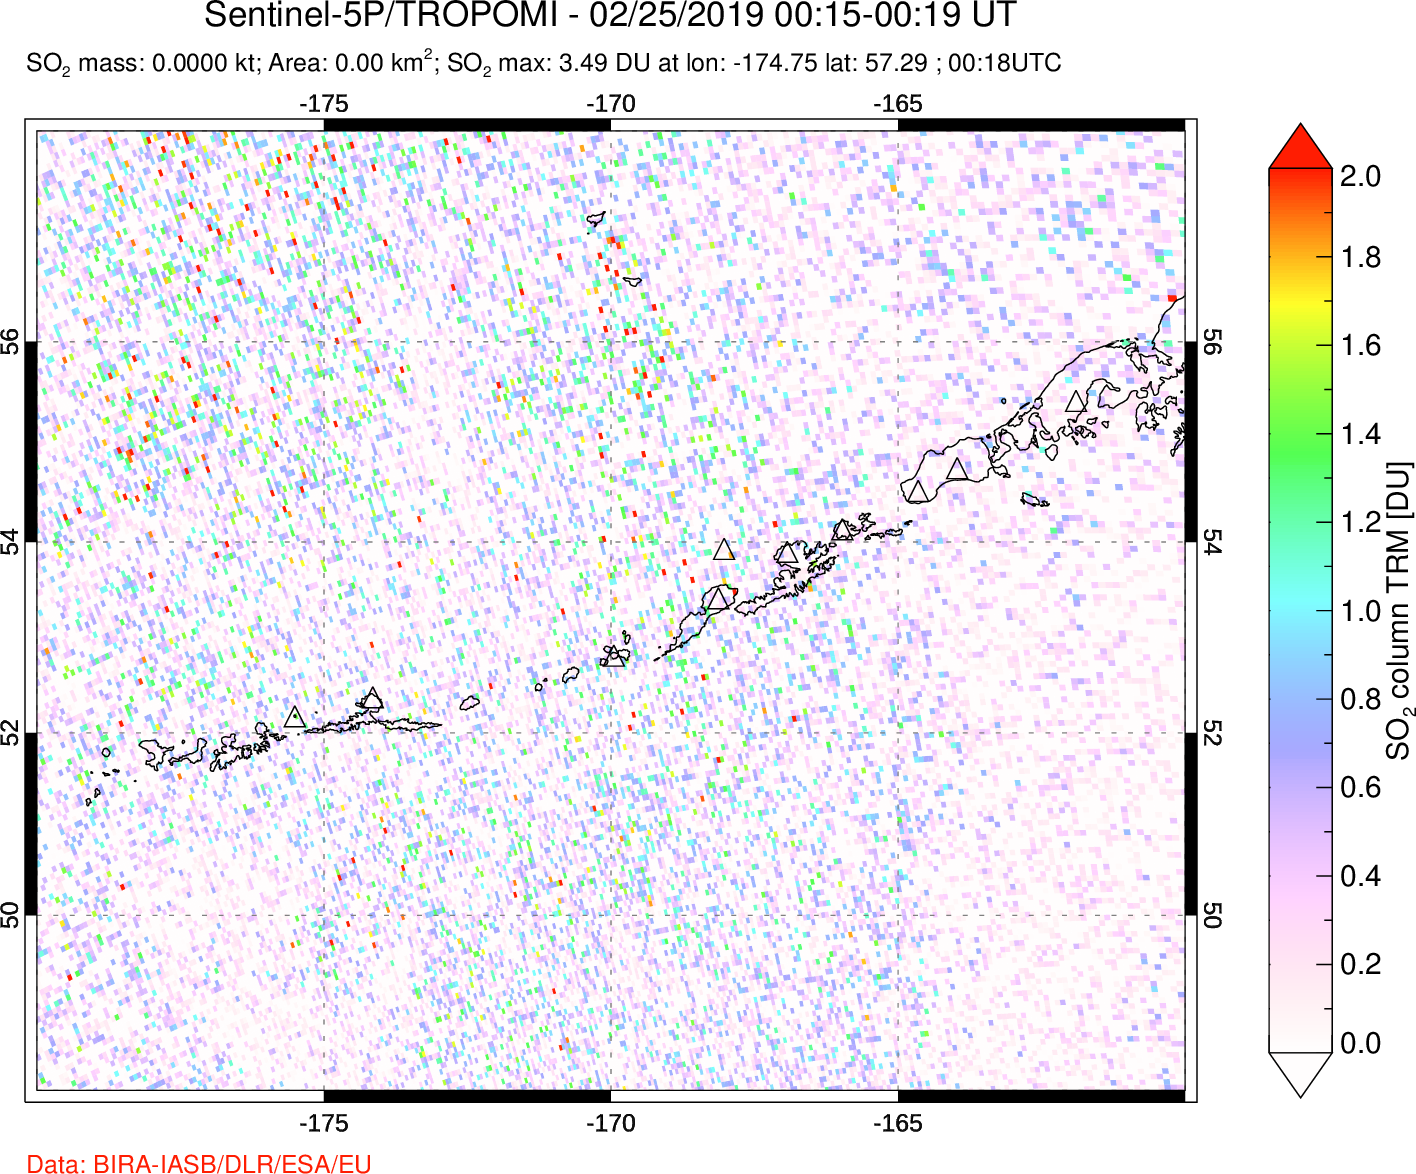 A sulfur dioxide image over Aleutian Islands, Alaska, USA on Feb 25, 2019.